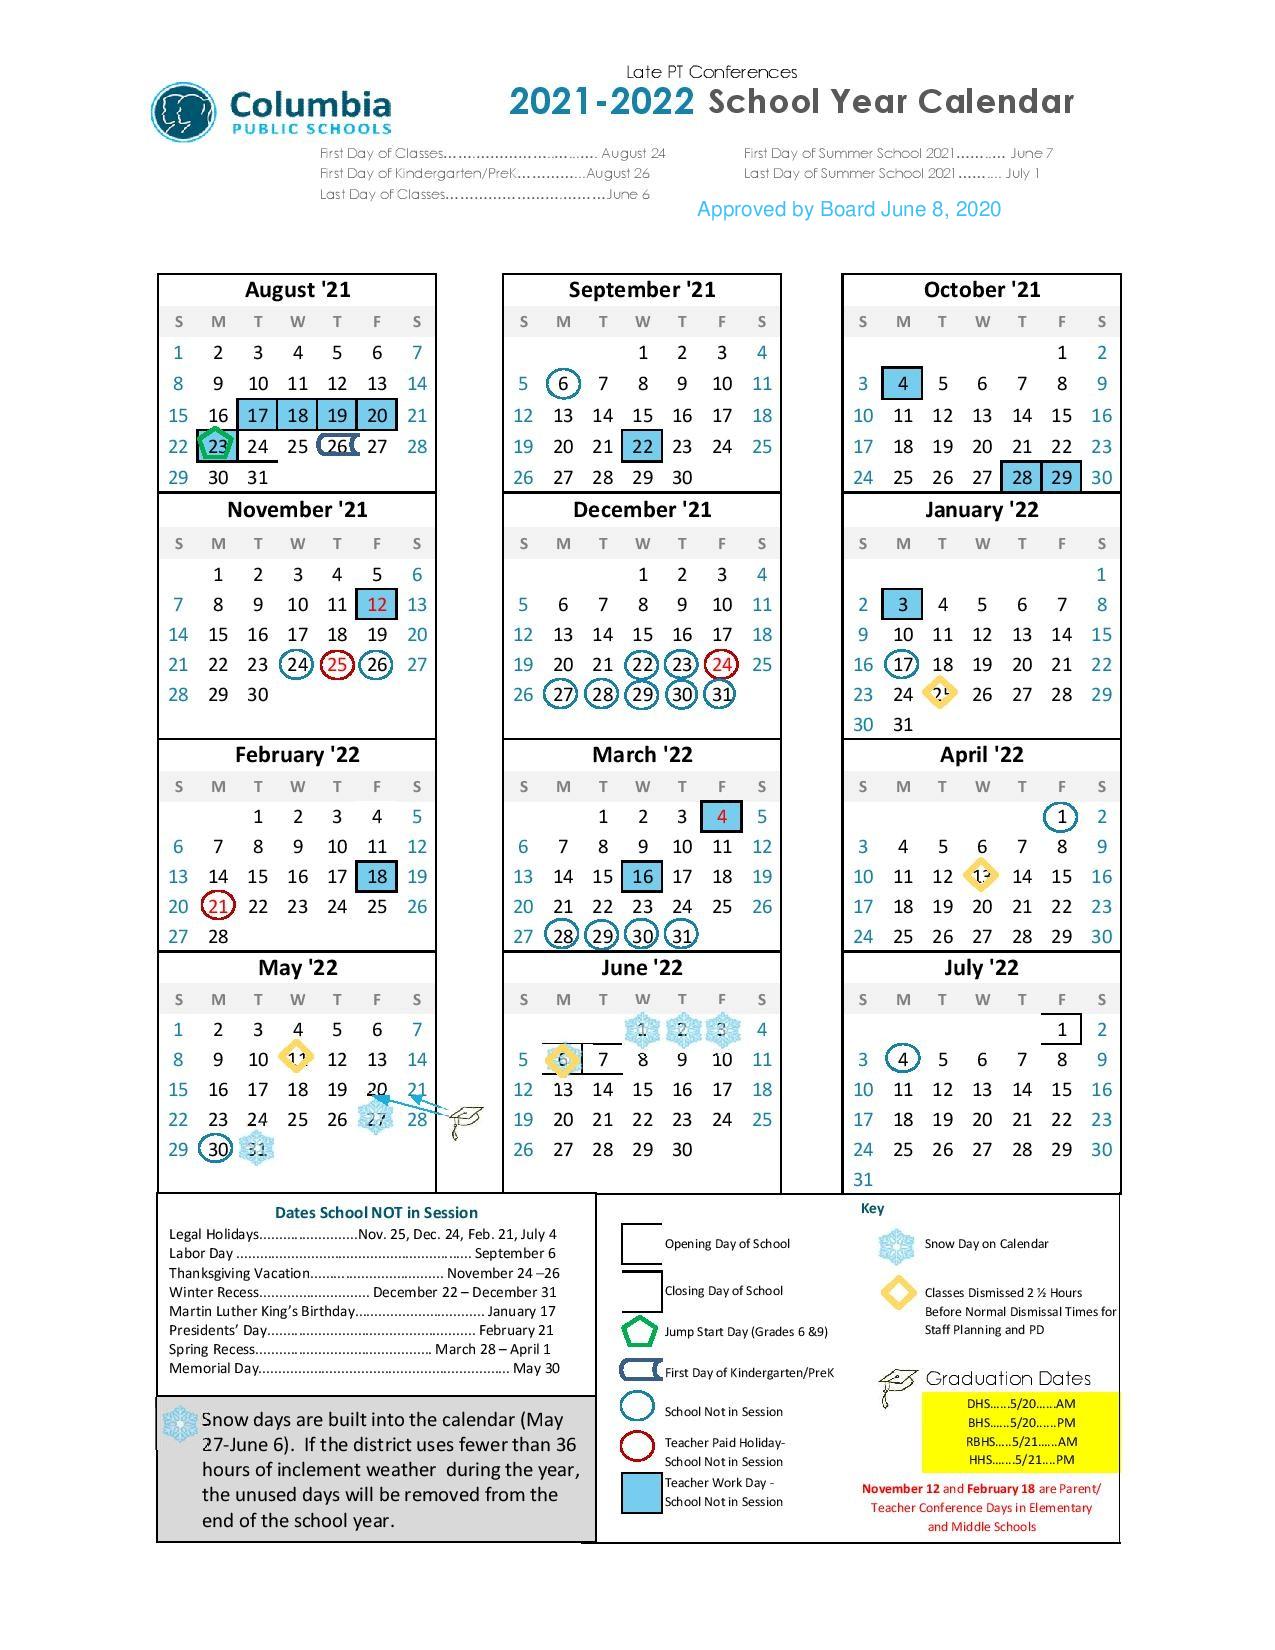 Columbia Academic Calendar Spring 2022 Columbia Public Schools Calendar 2021-2022 In Pdf